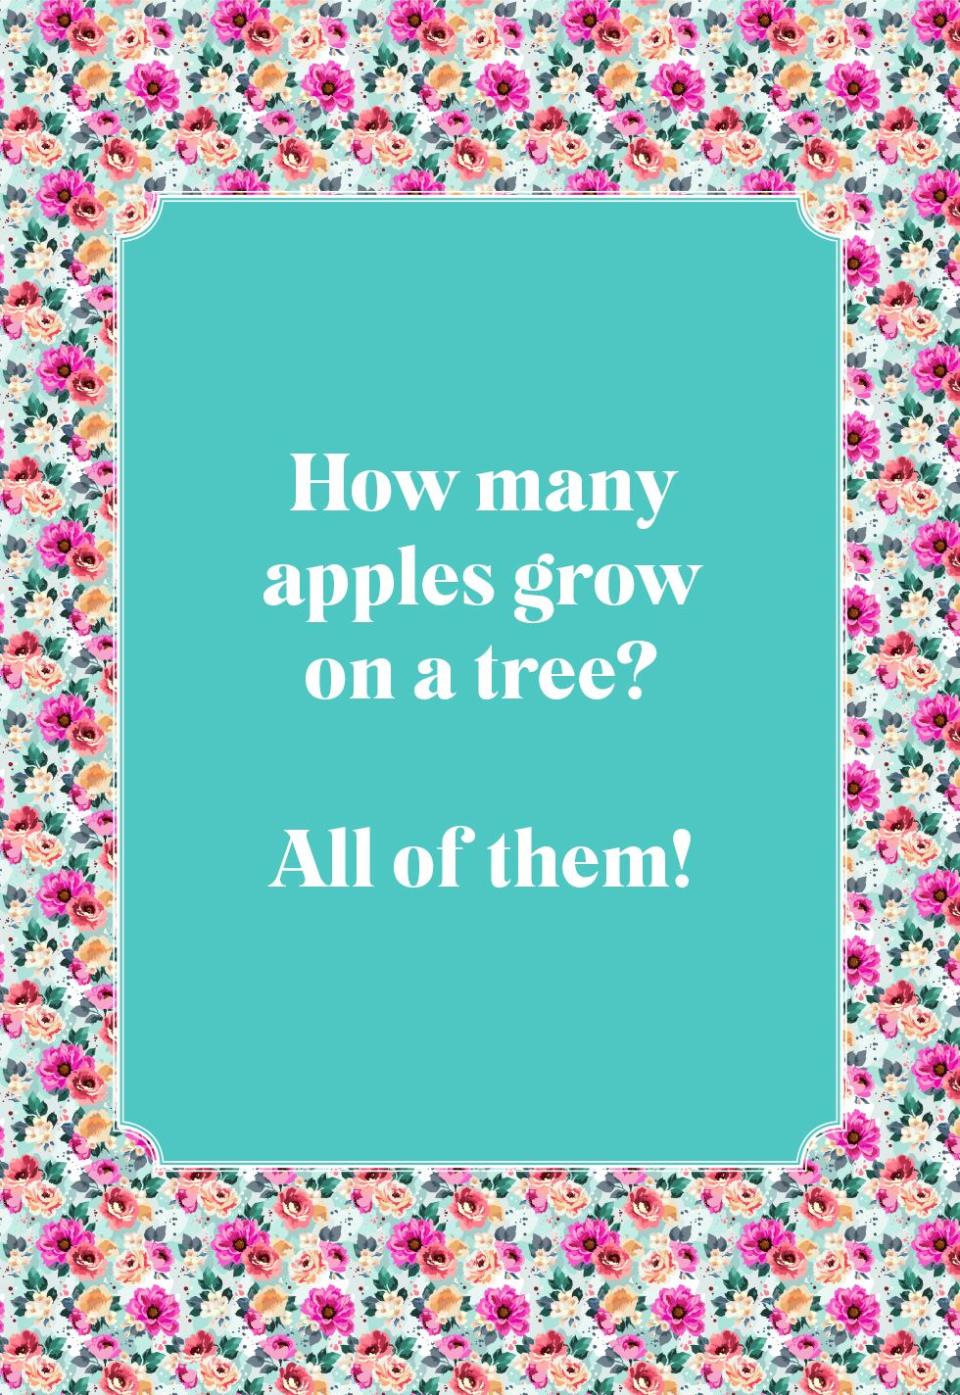 How many apples grow on a tree?